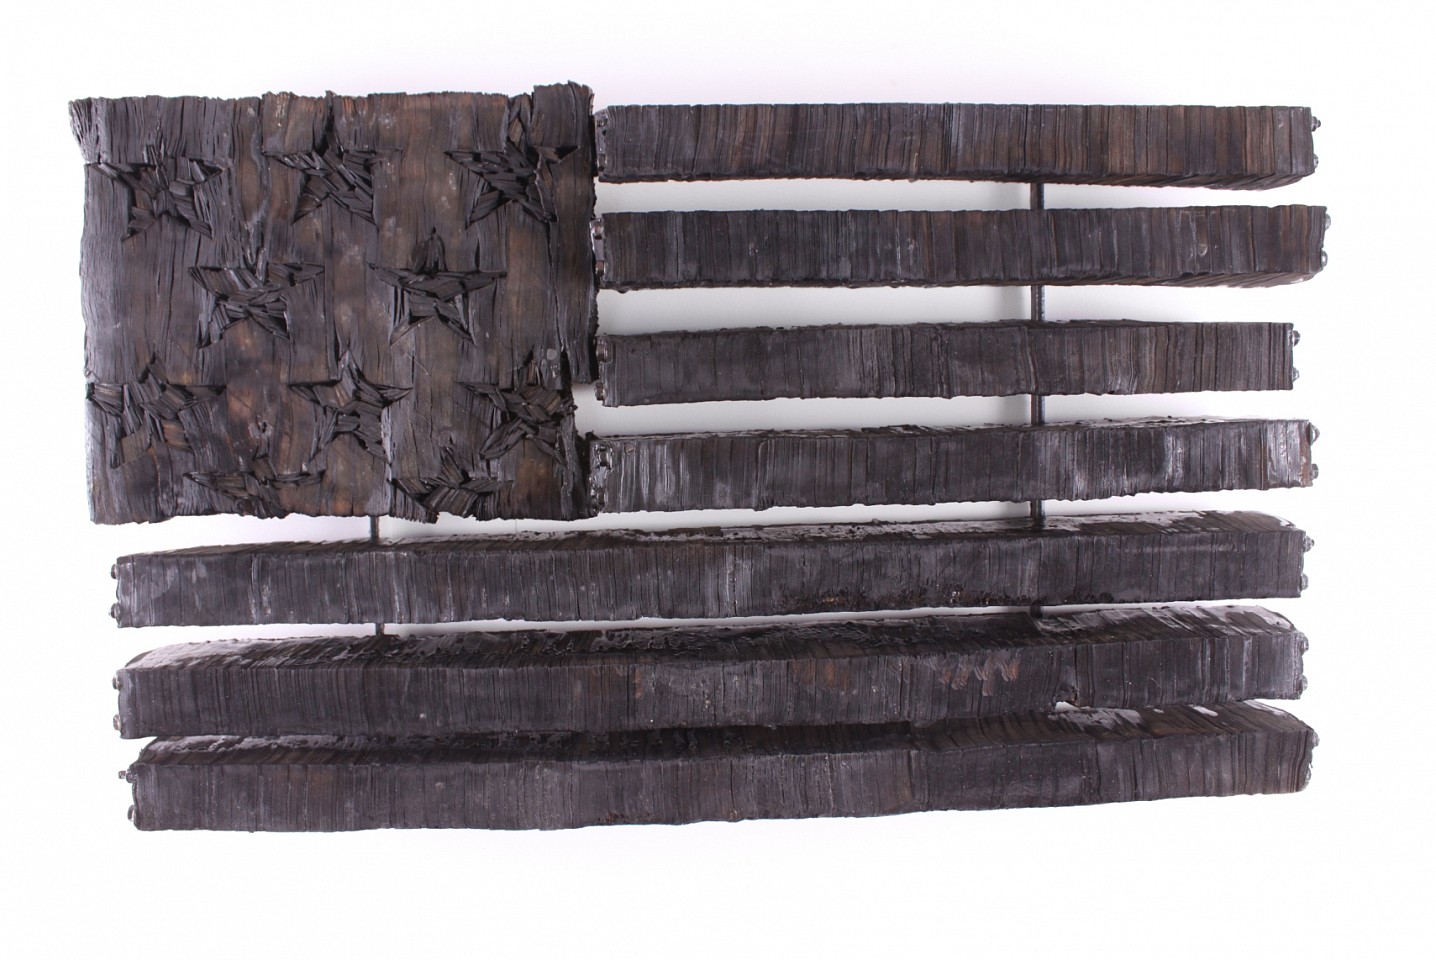 Kate Hunt, Burnt Flag, 2013
19 x 32 x 3 in.
Newspaper, Steel
5034